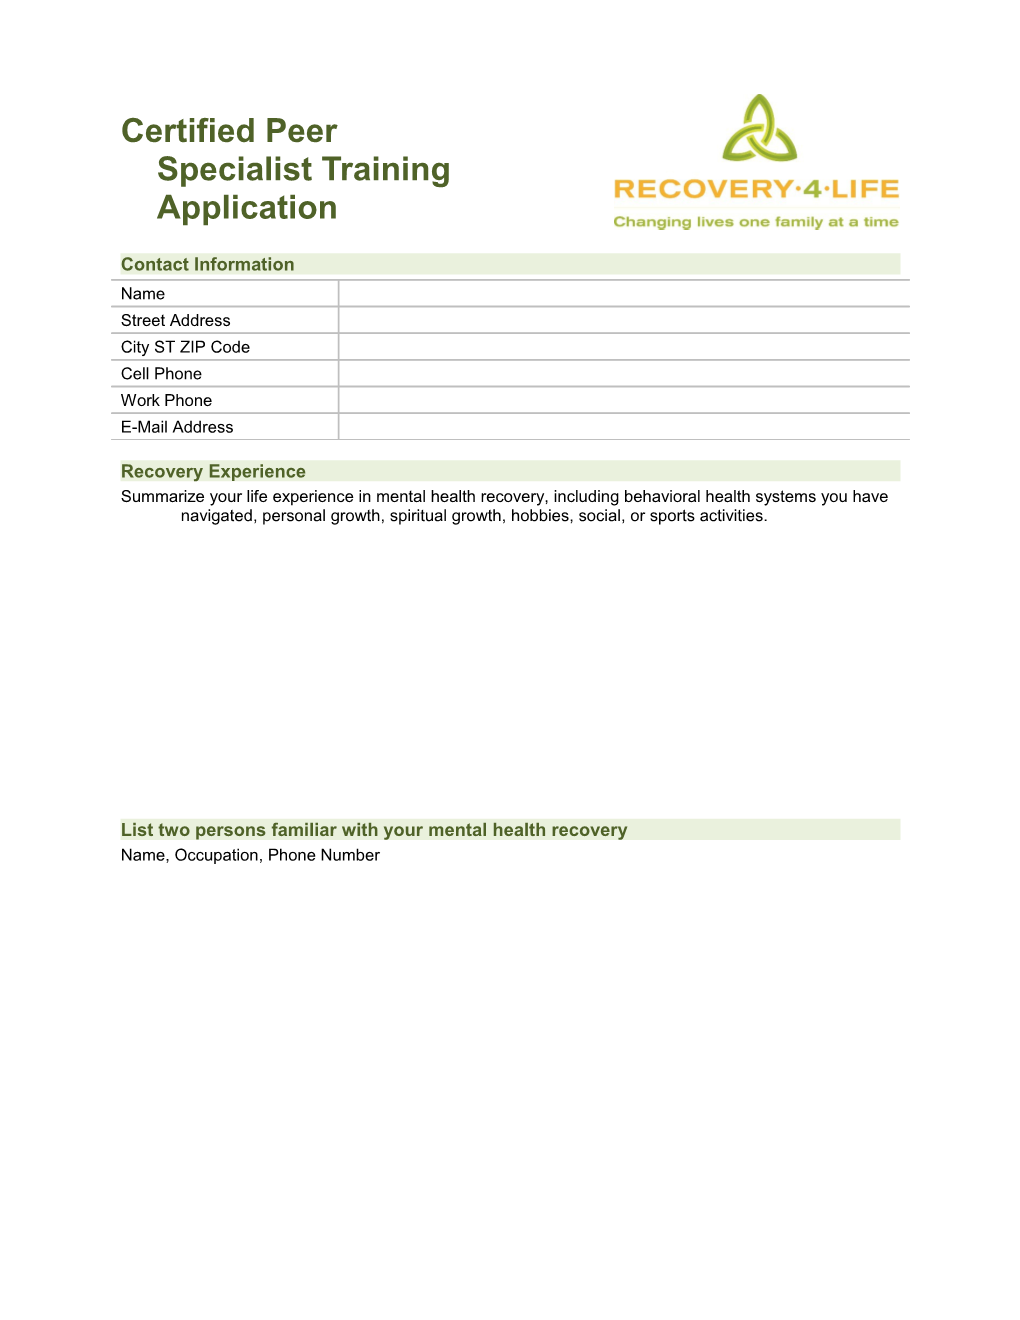 Certified Peer Specialist Training Application